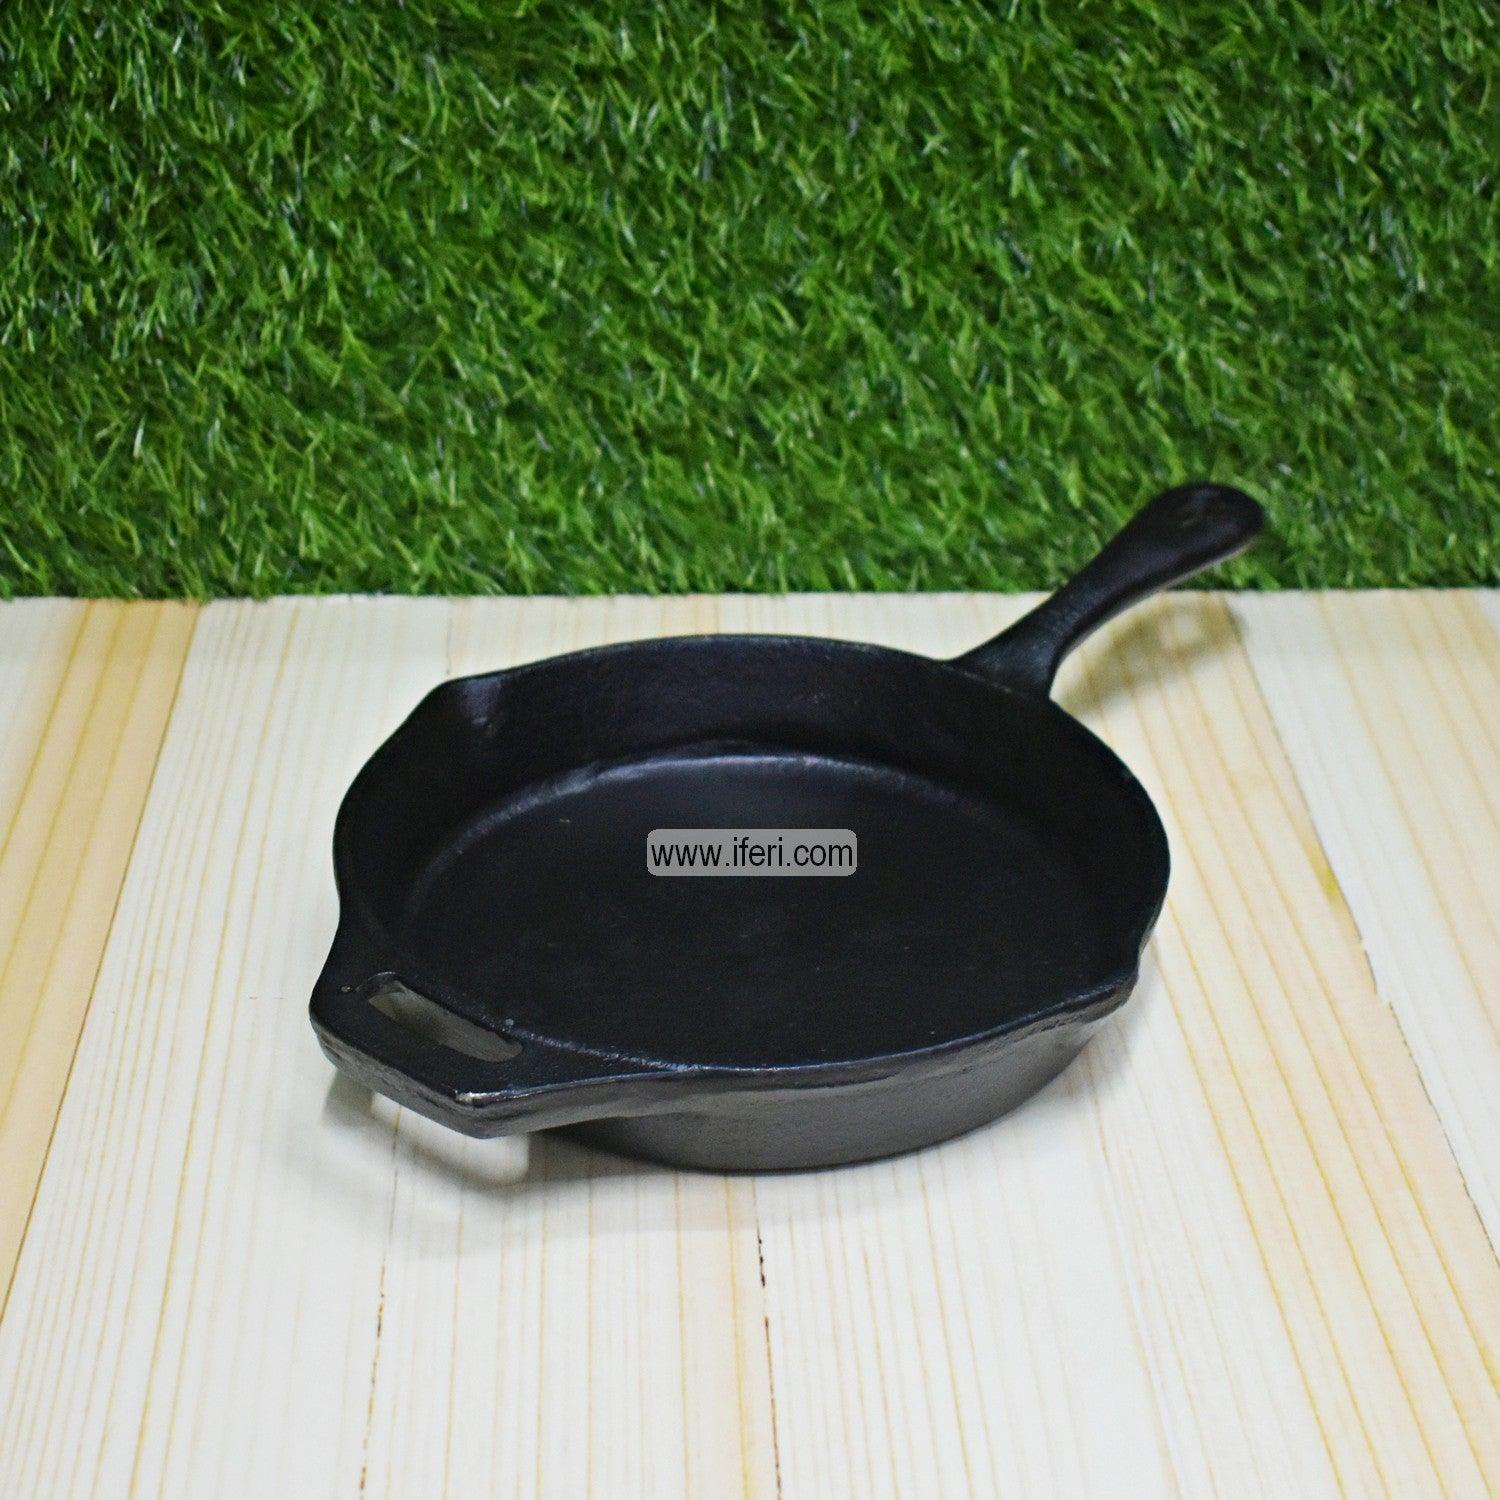 23cm Cast Iron Grill Pan SY2006 Price in Bangladesh - iferi.com